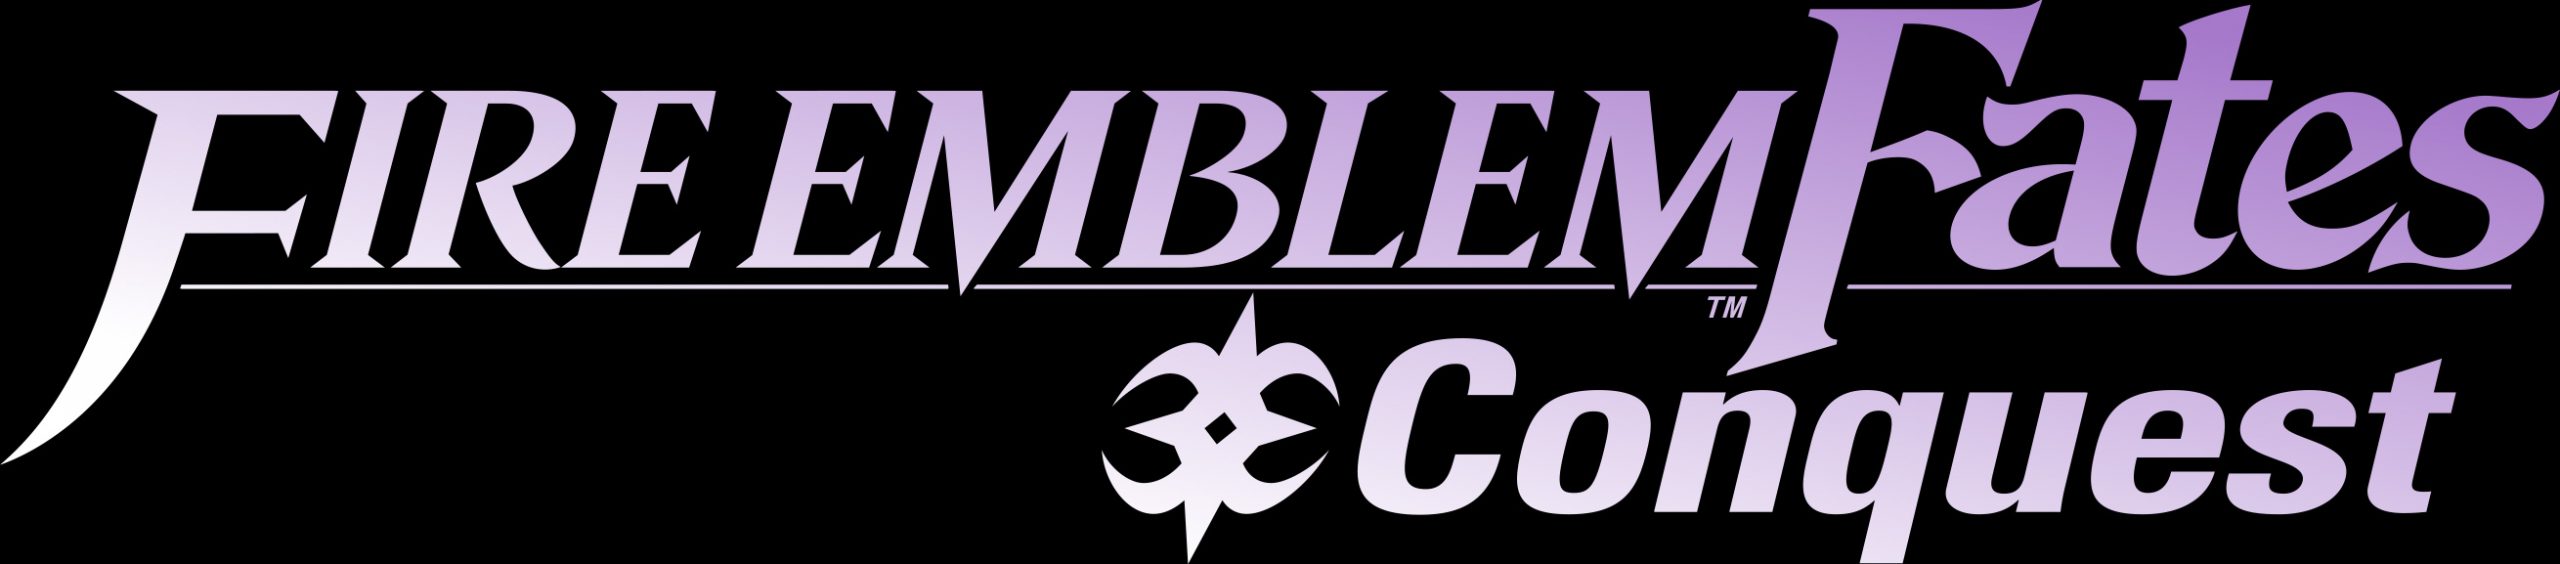 Fire Emblem Fates Conquest Logo US scaled